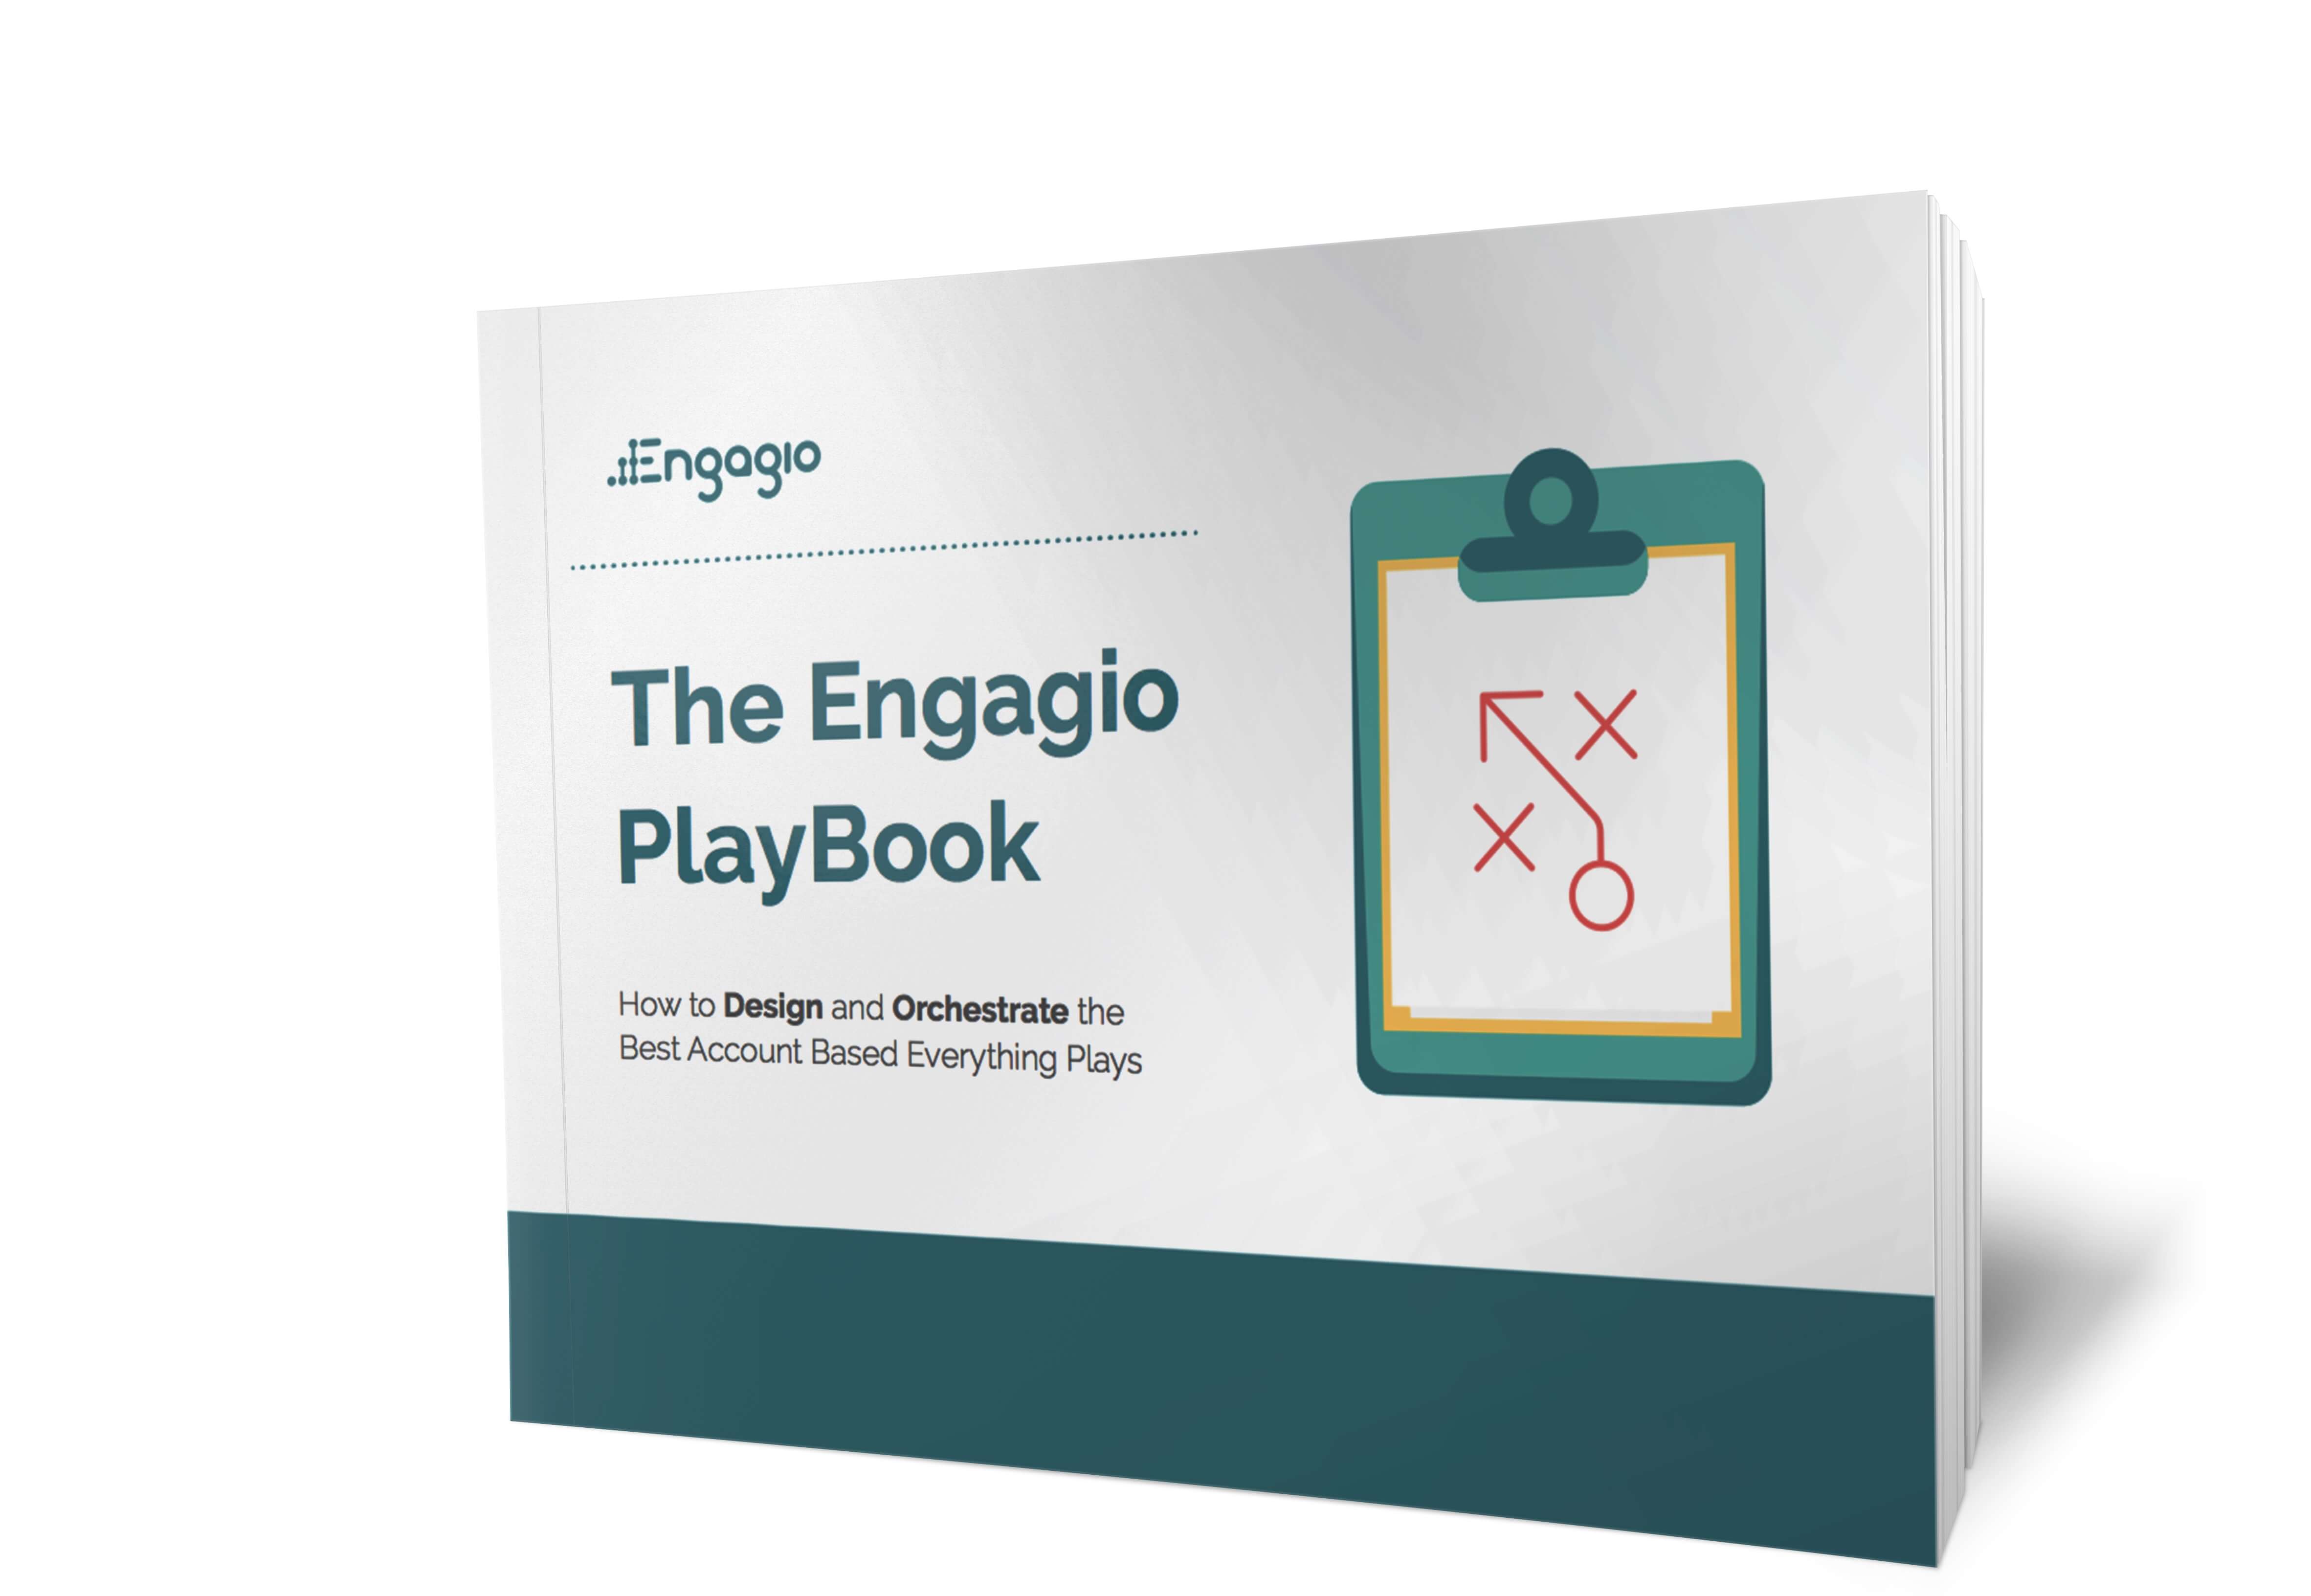 Read the Engagio PlayBook